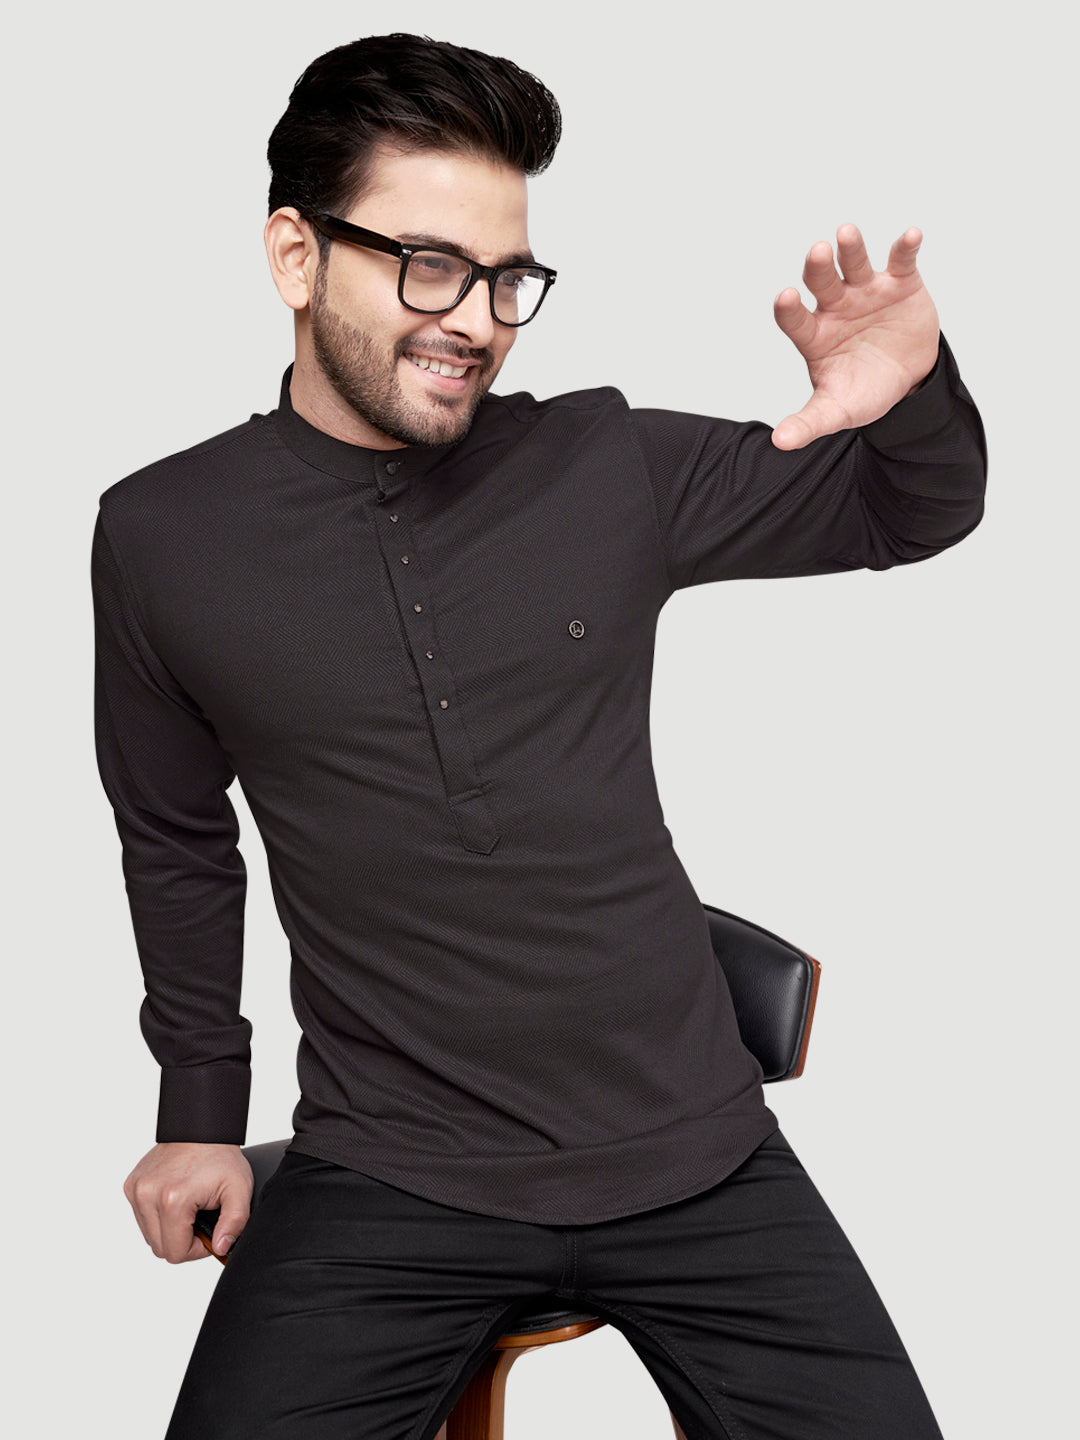 Black and White Shirts Men's Designer Short Kurta with Metal Buttons Black